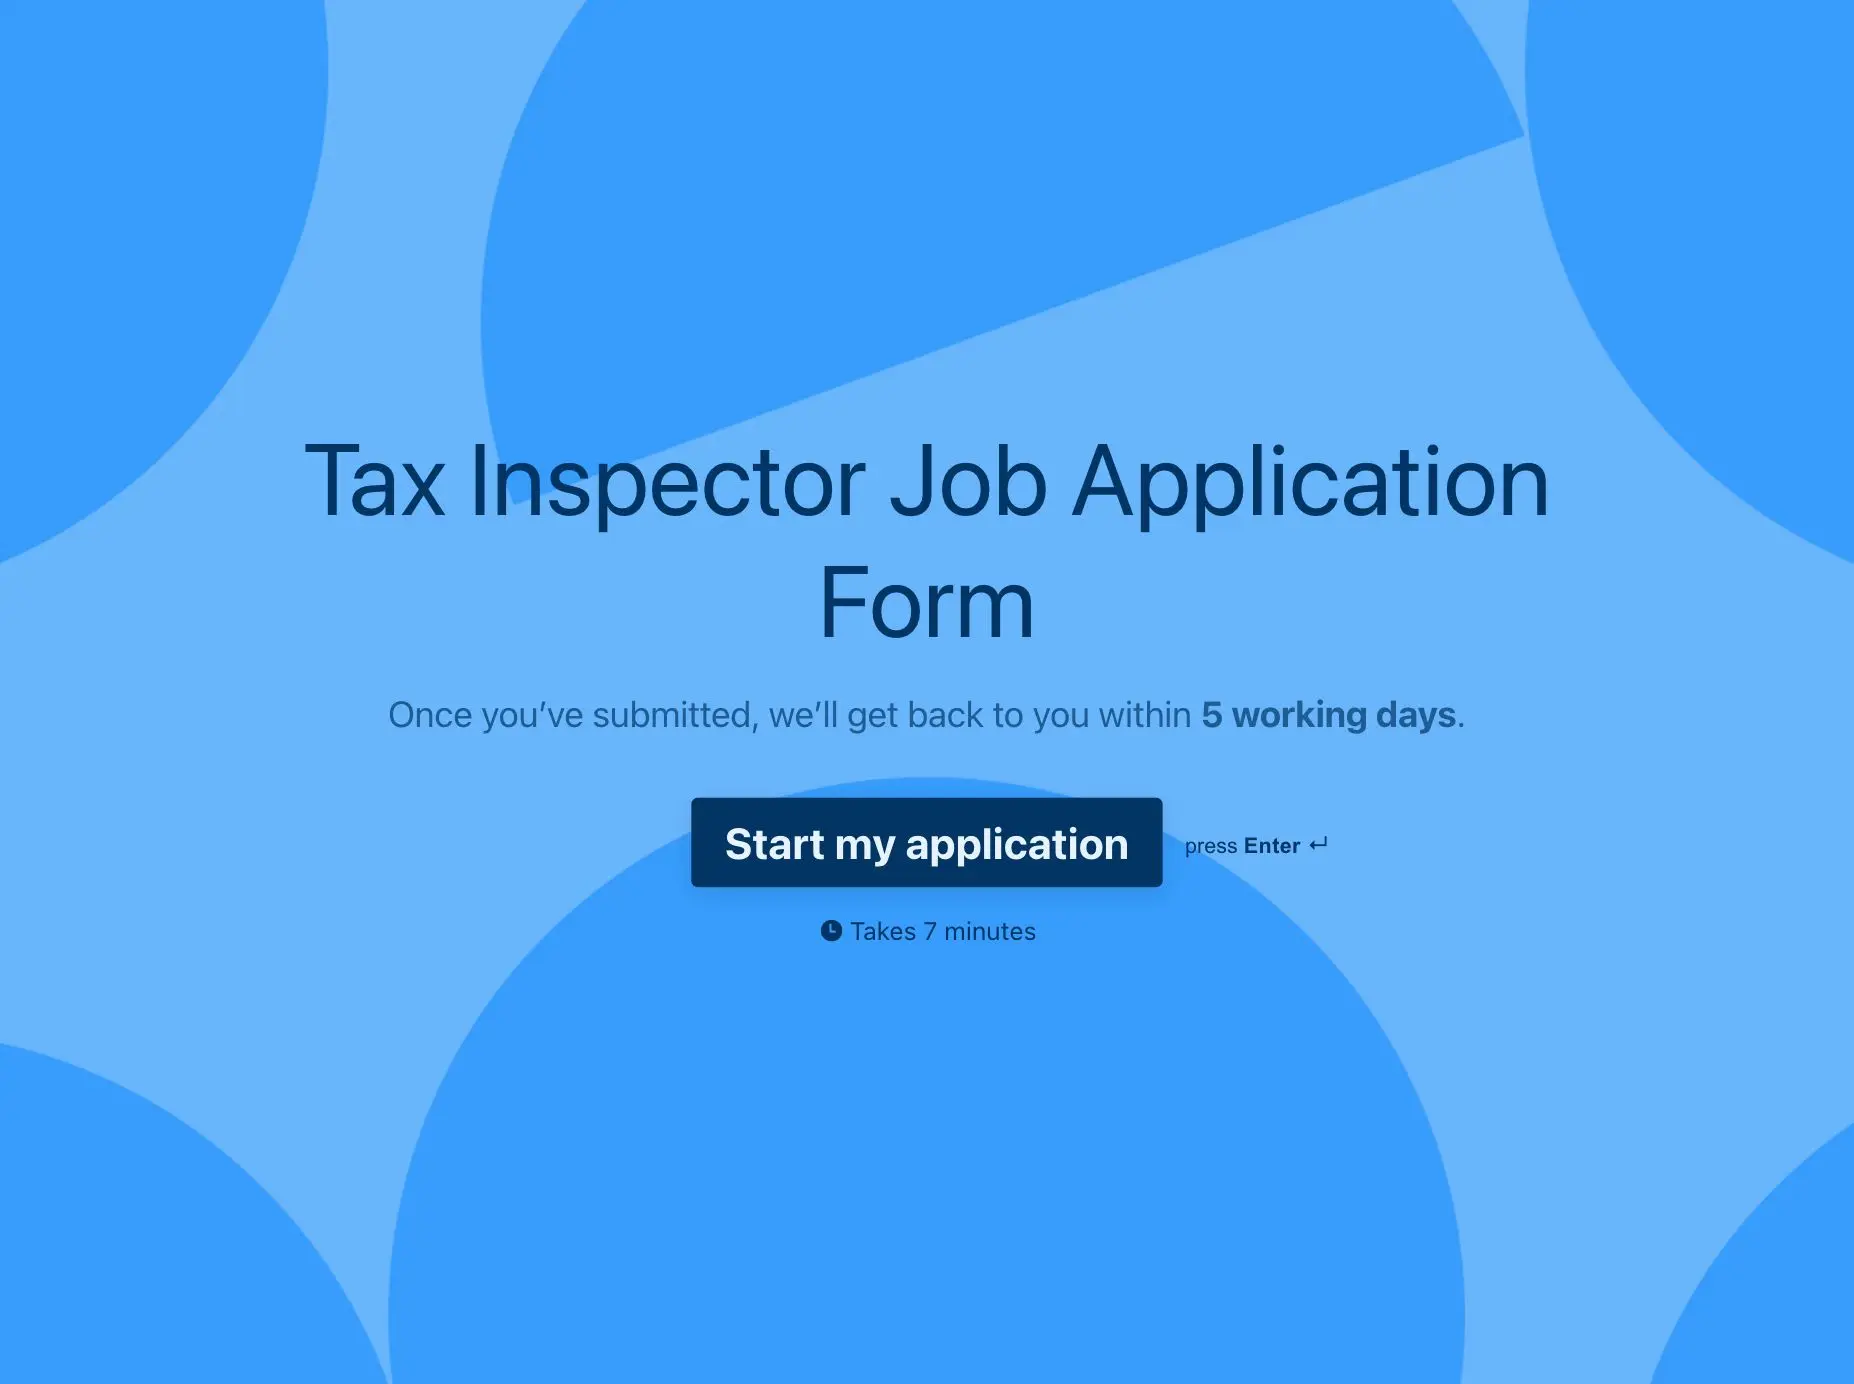 Tax Inspector Job Application Form Template Hero